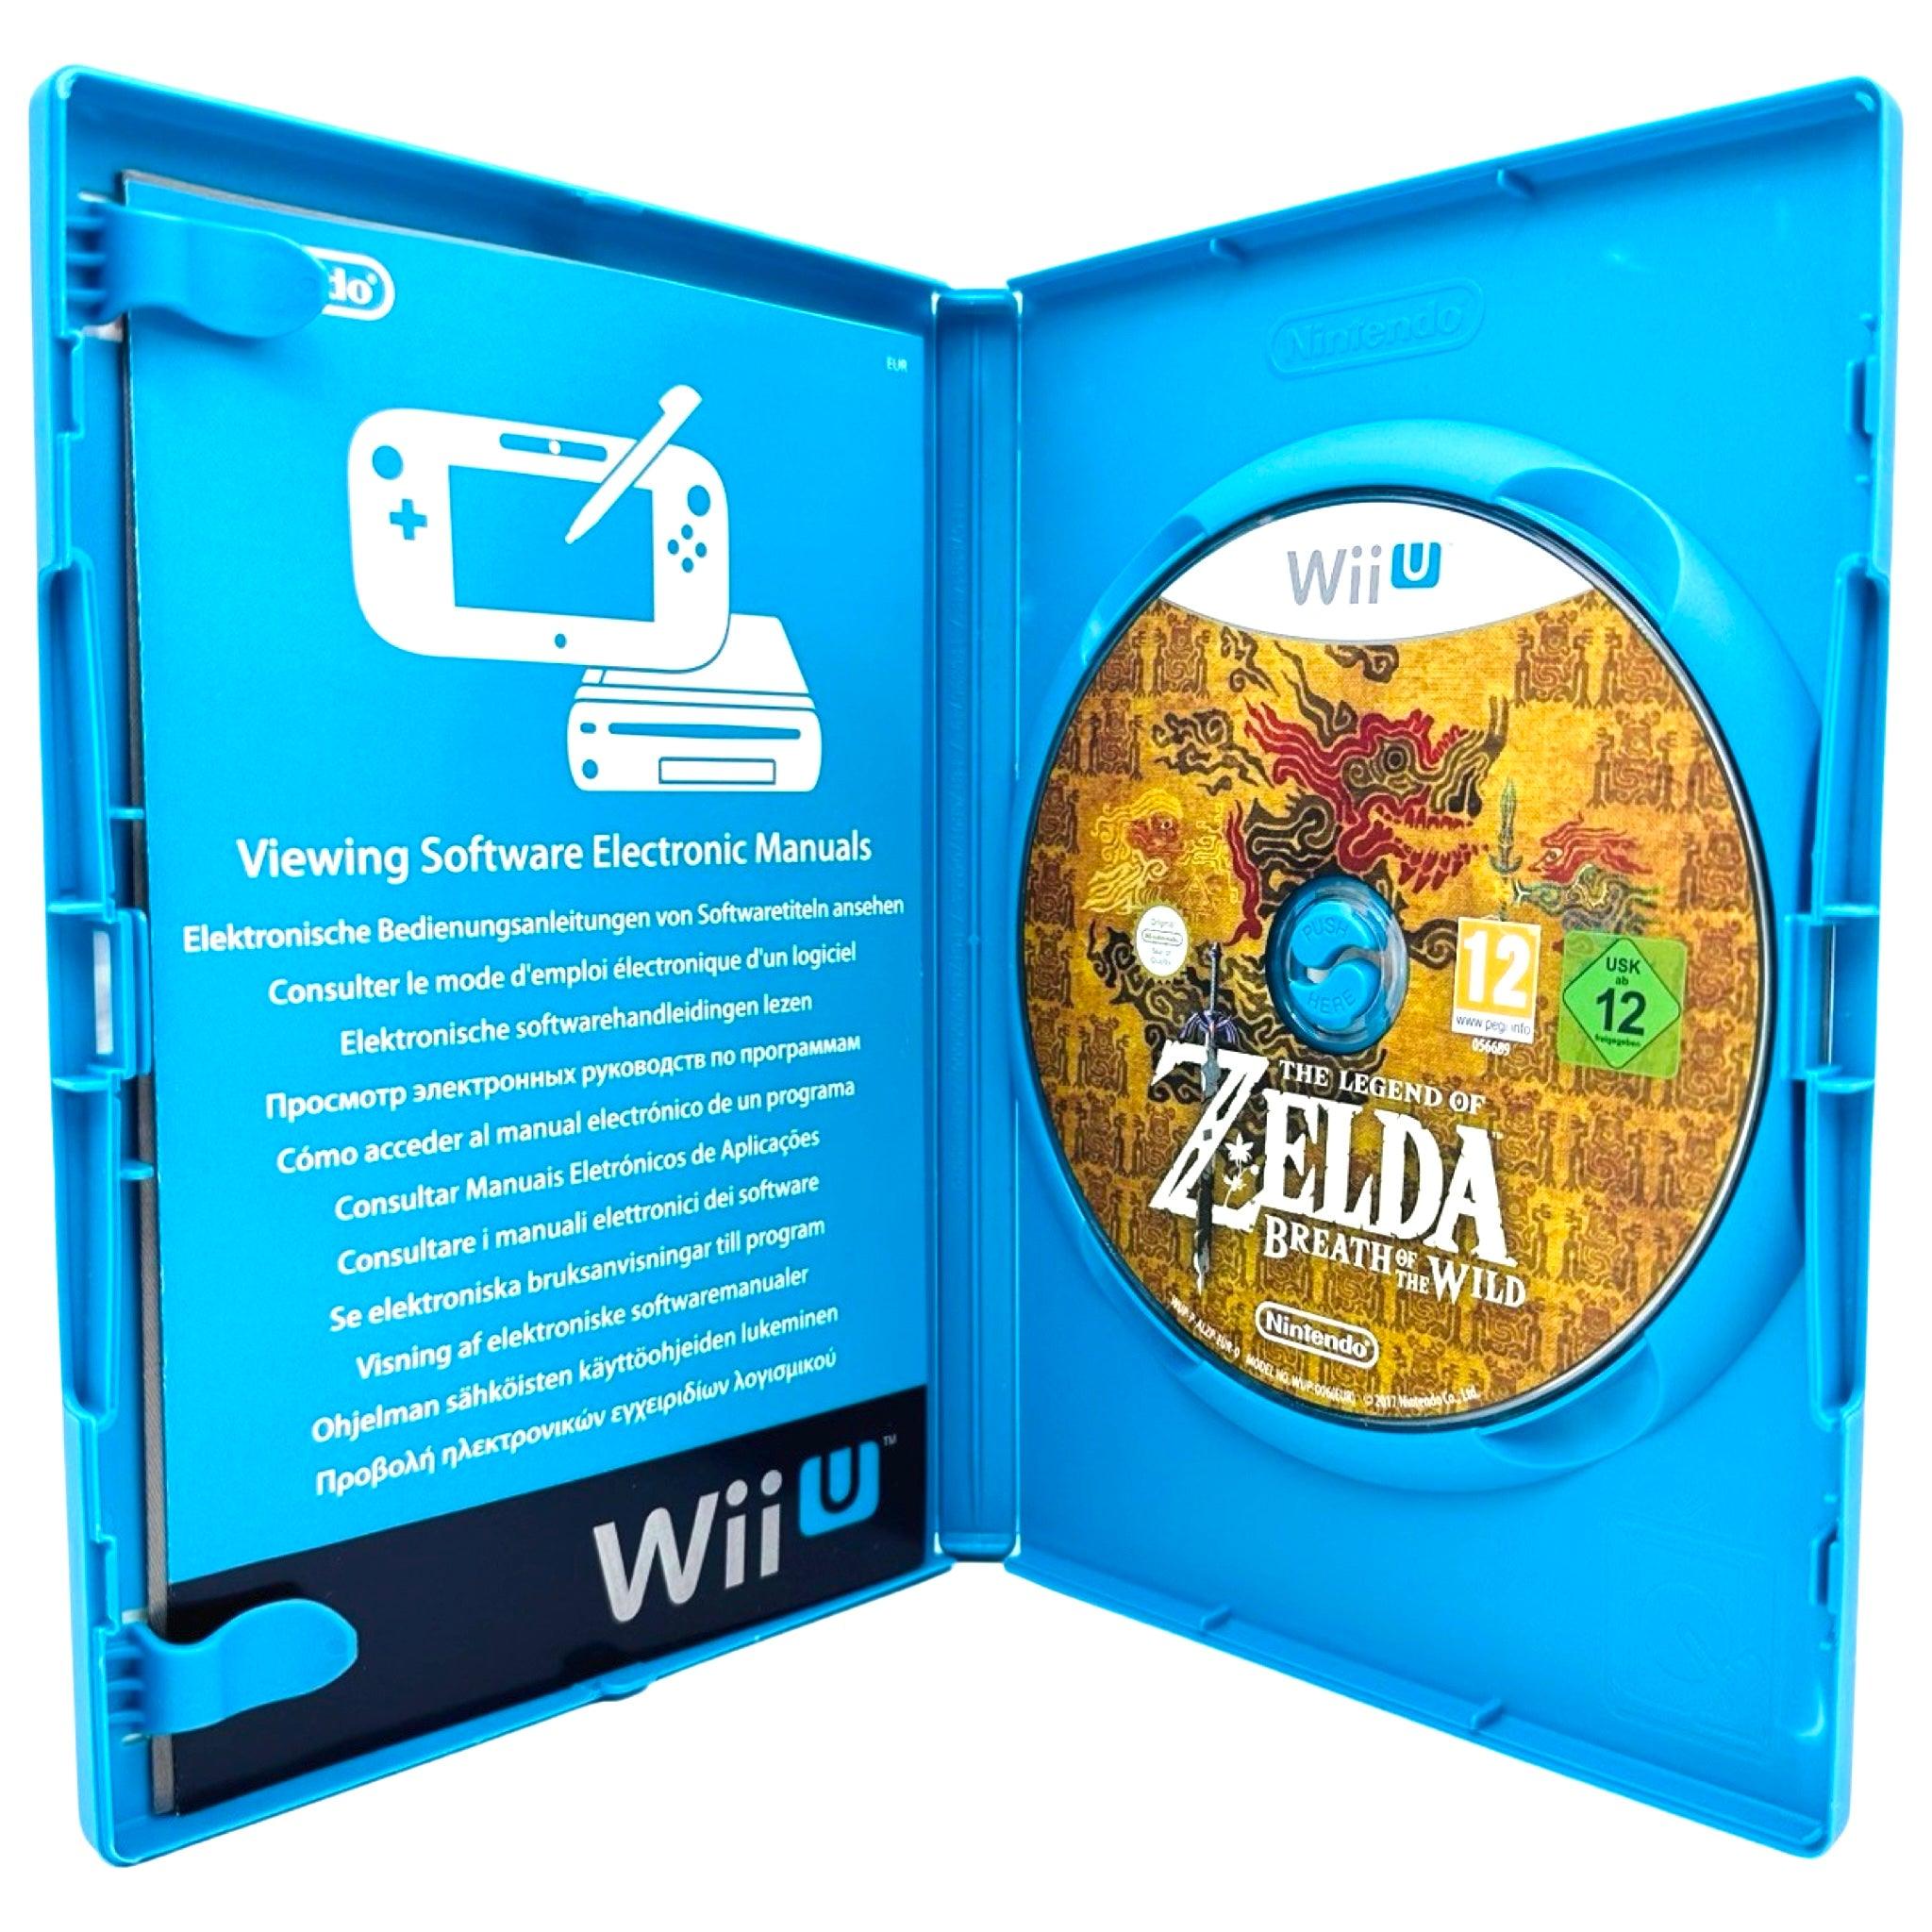 Wii U: The Legend of Zelda: Breath of the Wild - RetroGaming.no